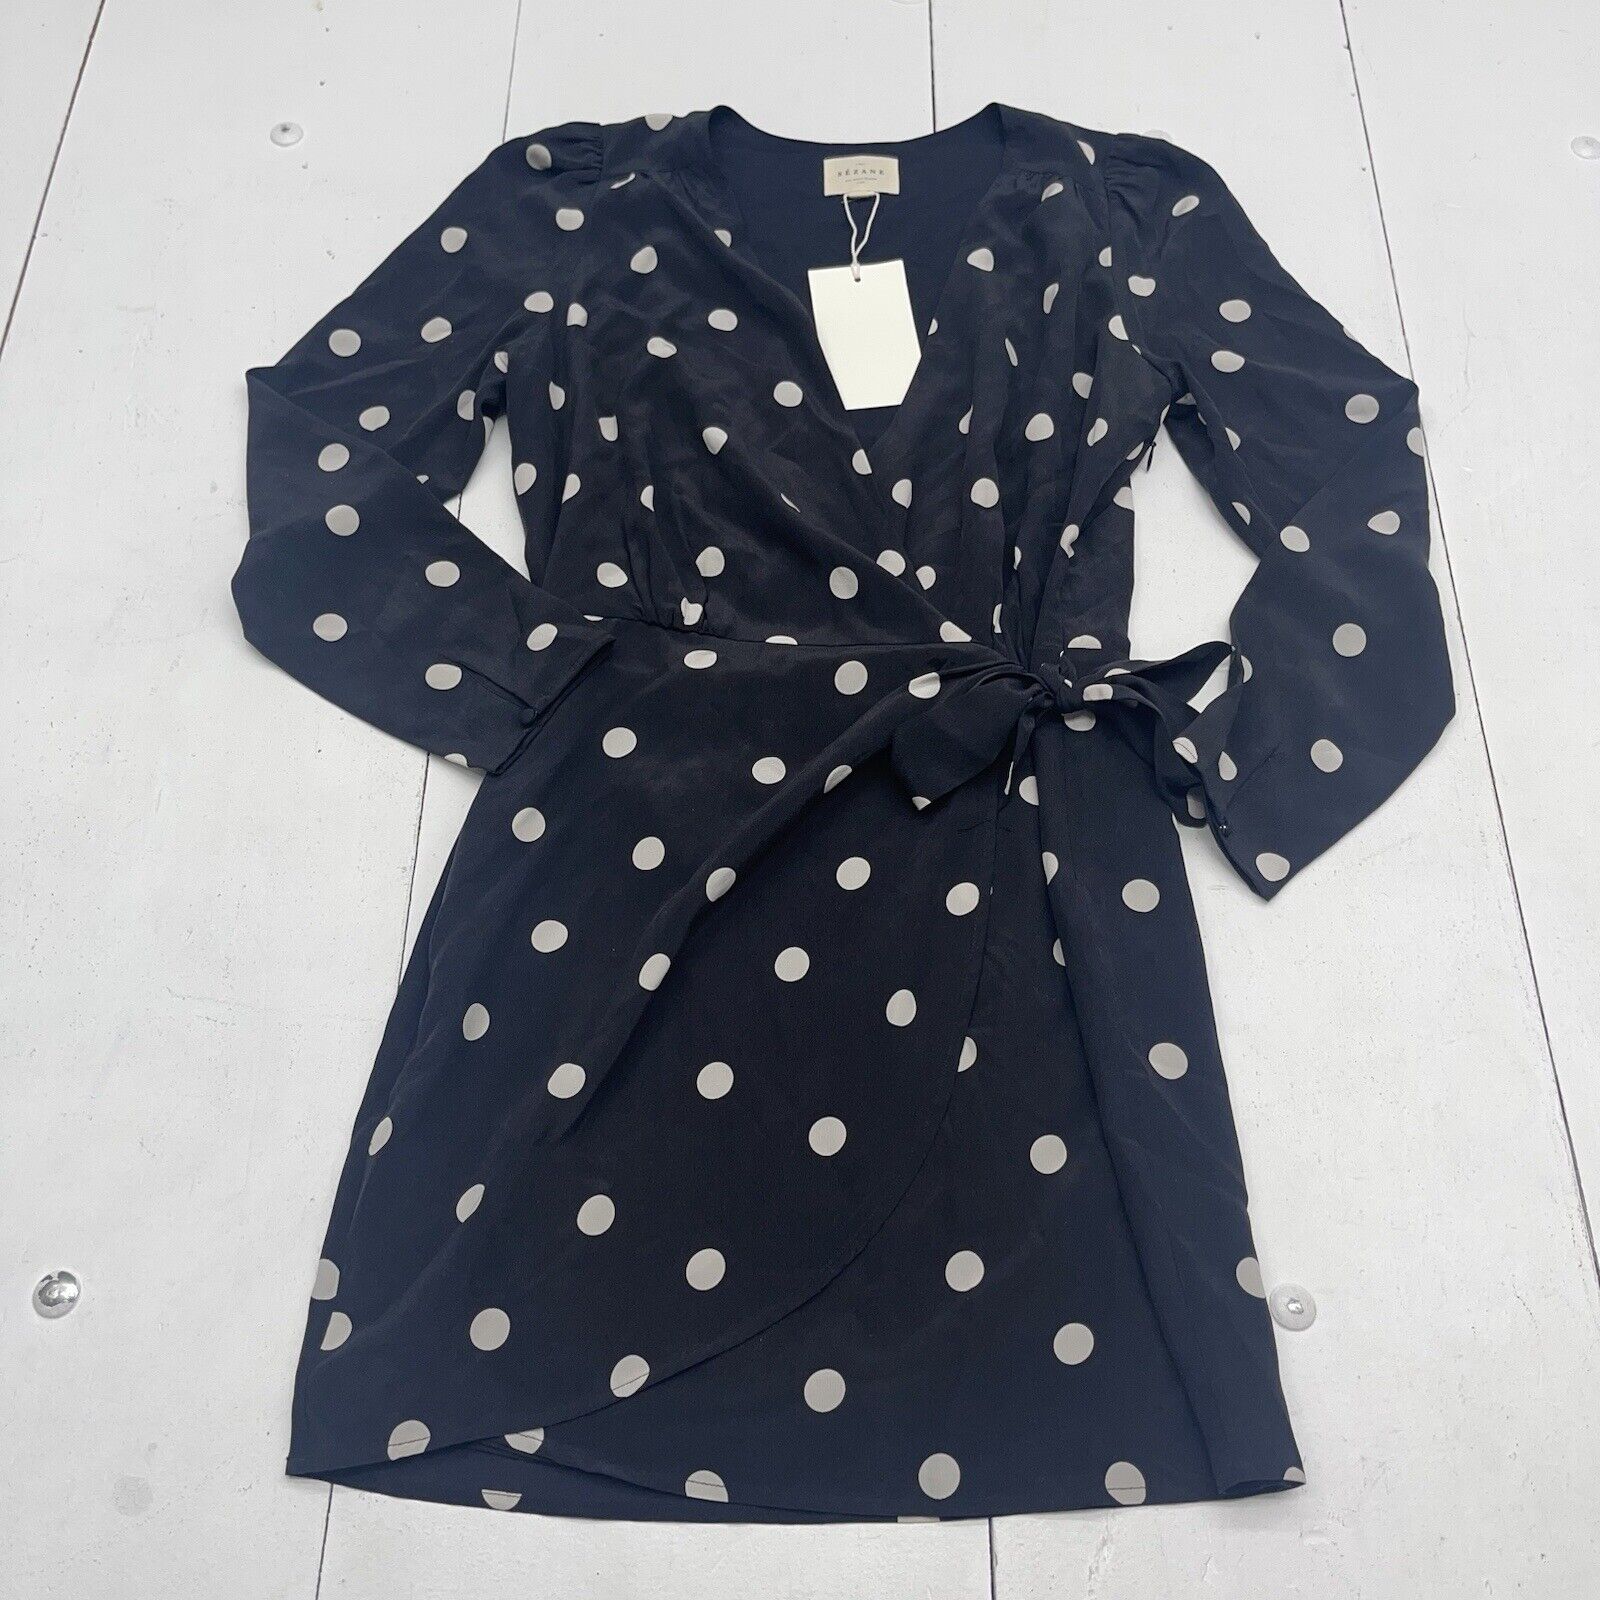 Sezane Robe Noemia Black Polka Dot Dress Women’s Size 6 MSRP $220